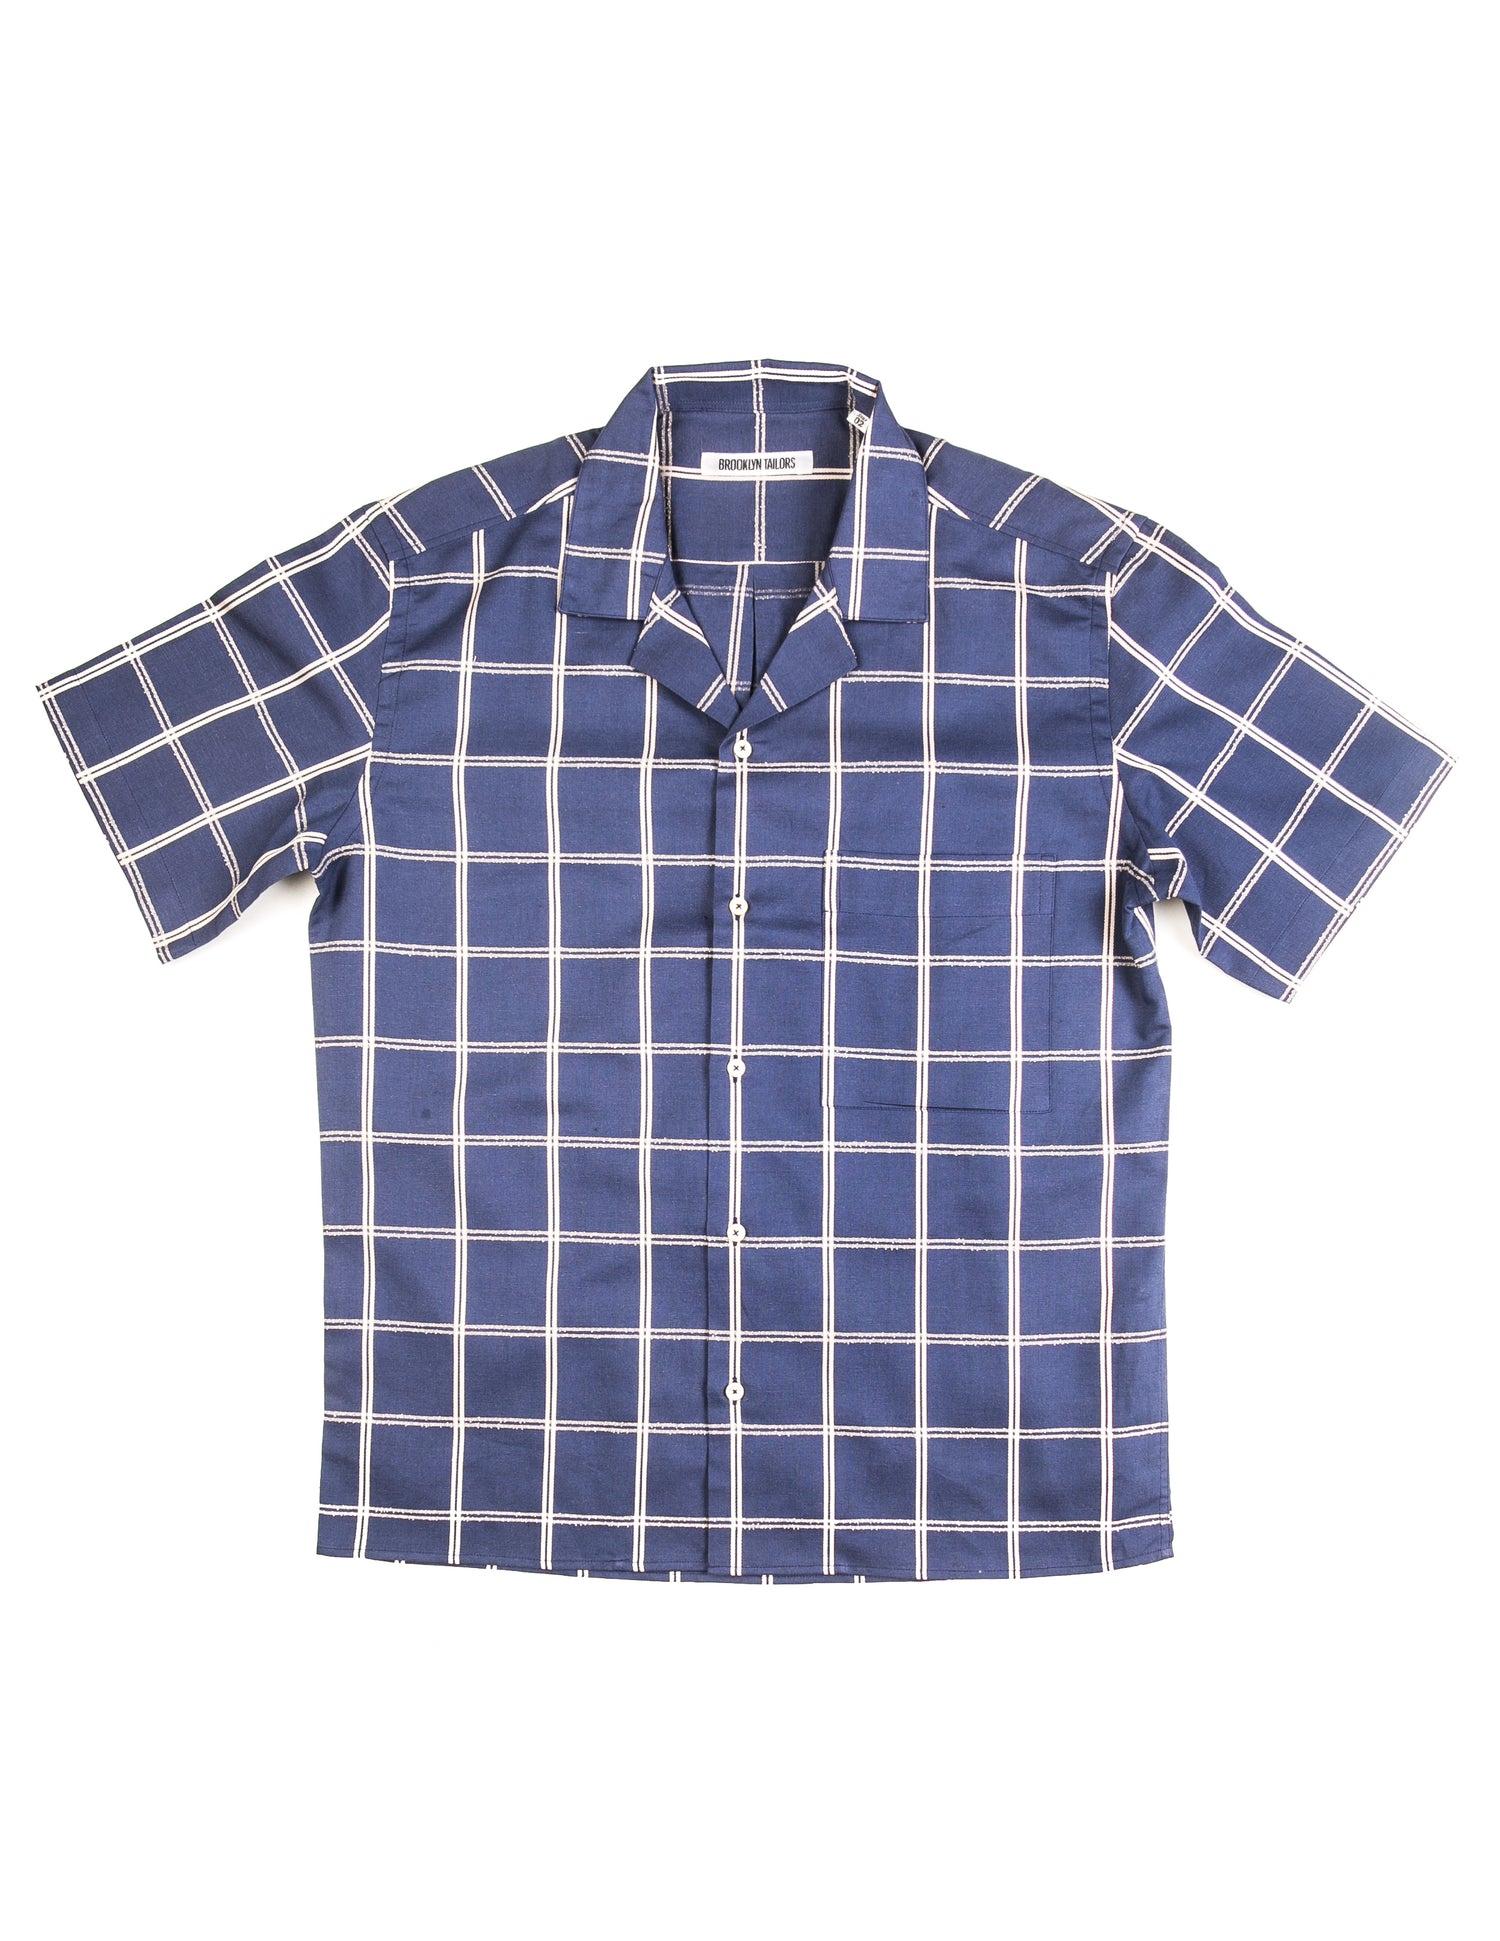 Brooklyn Tailors BKT18 Camp Shirt in Blue Windowpane full length flat shot